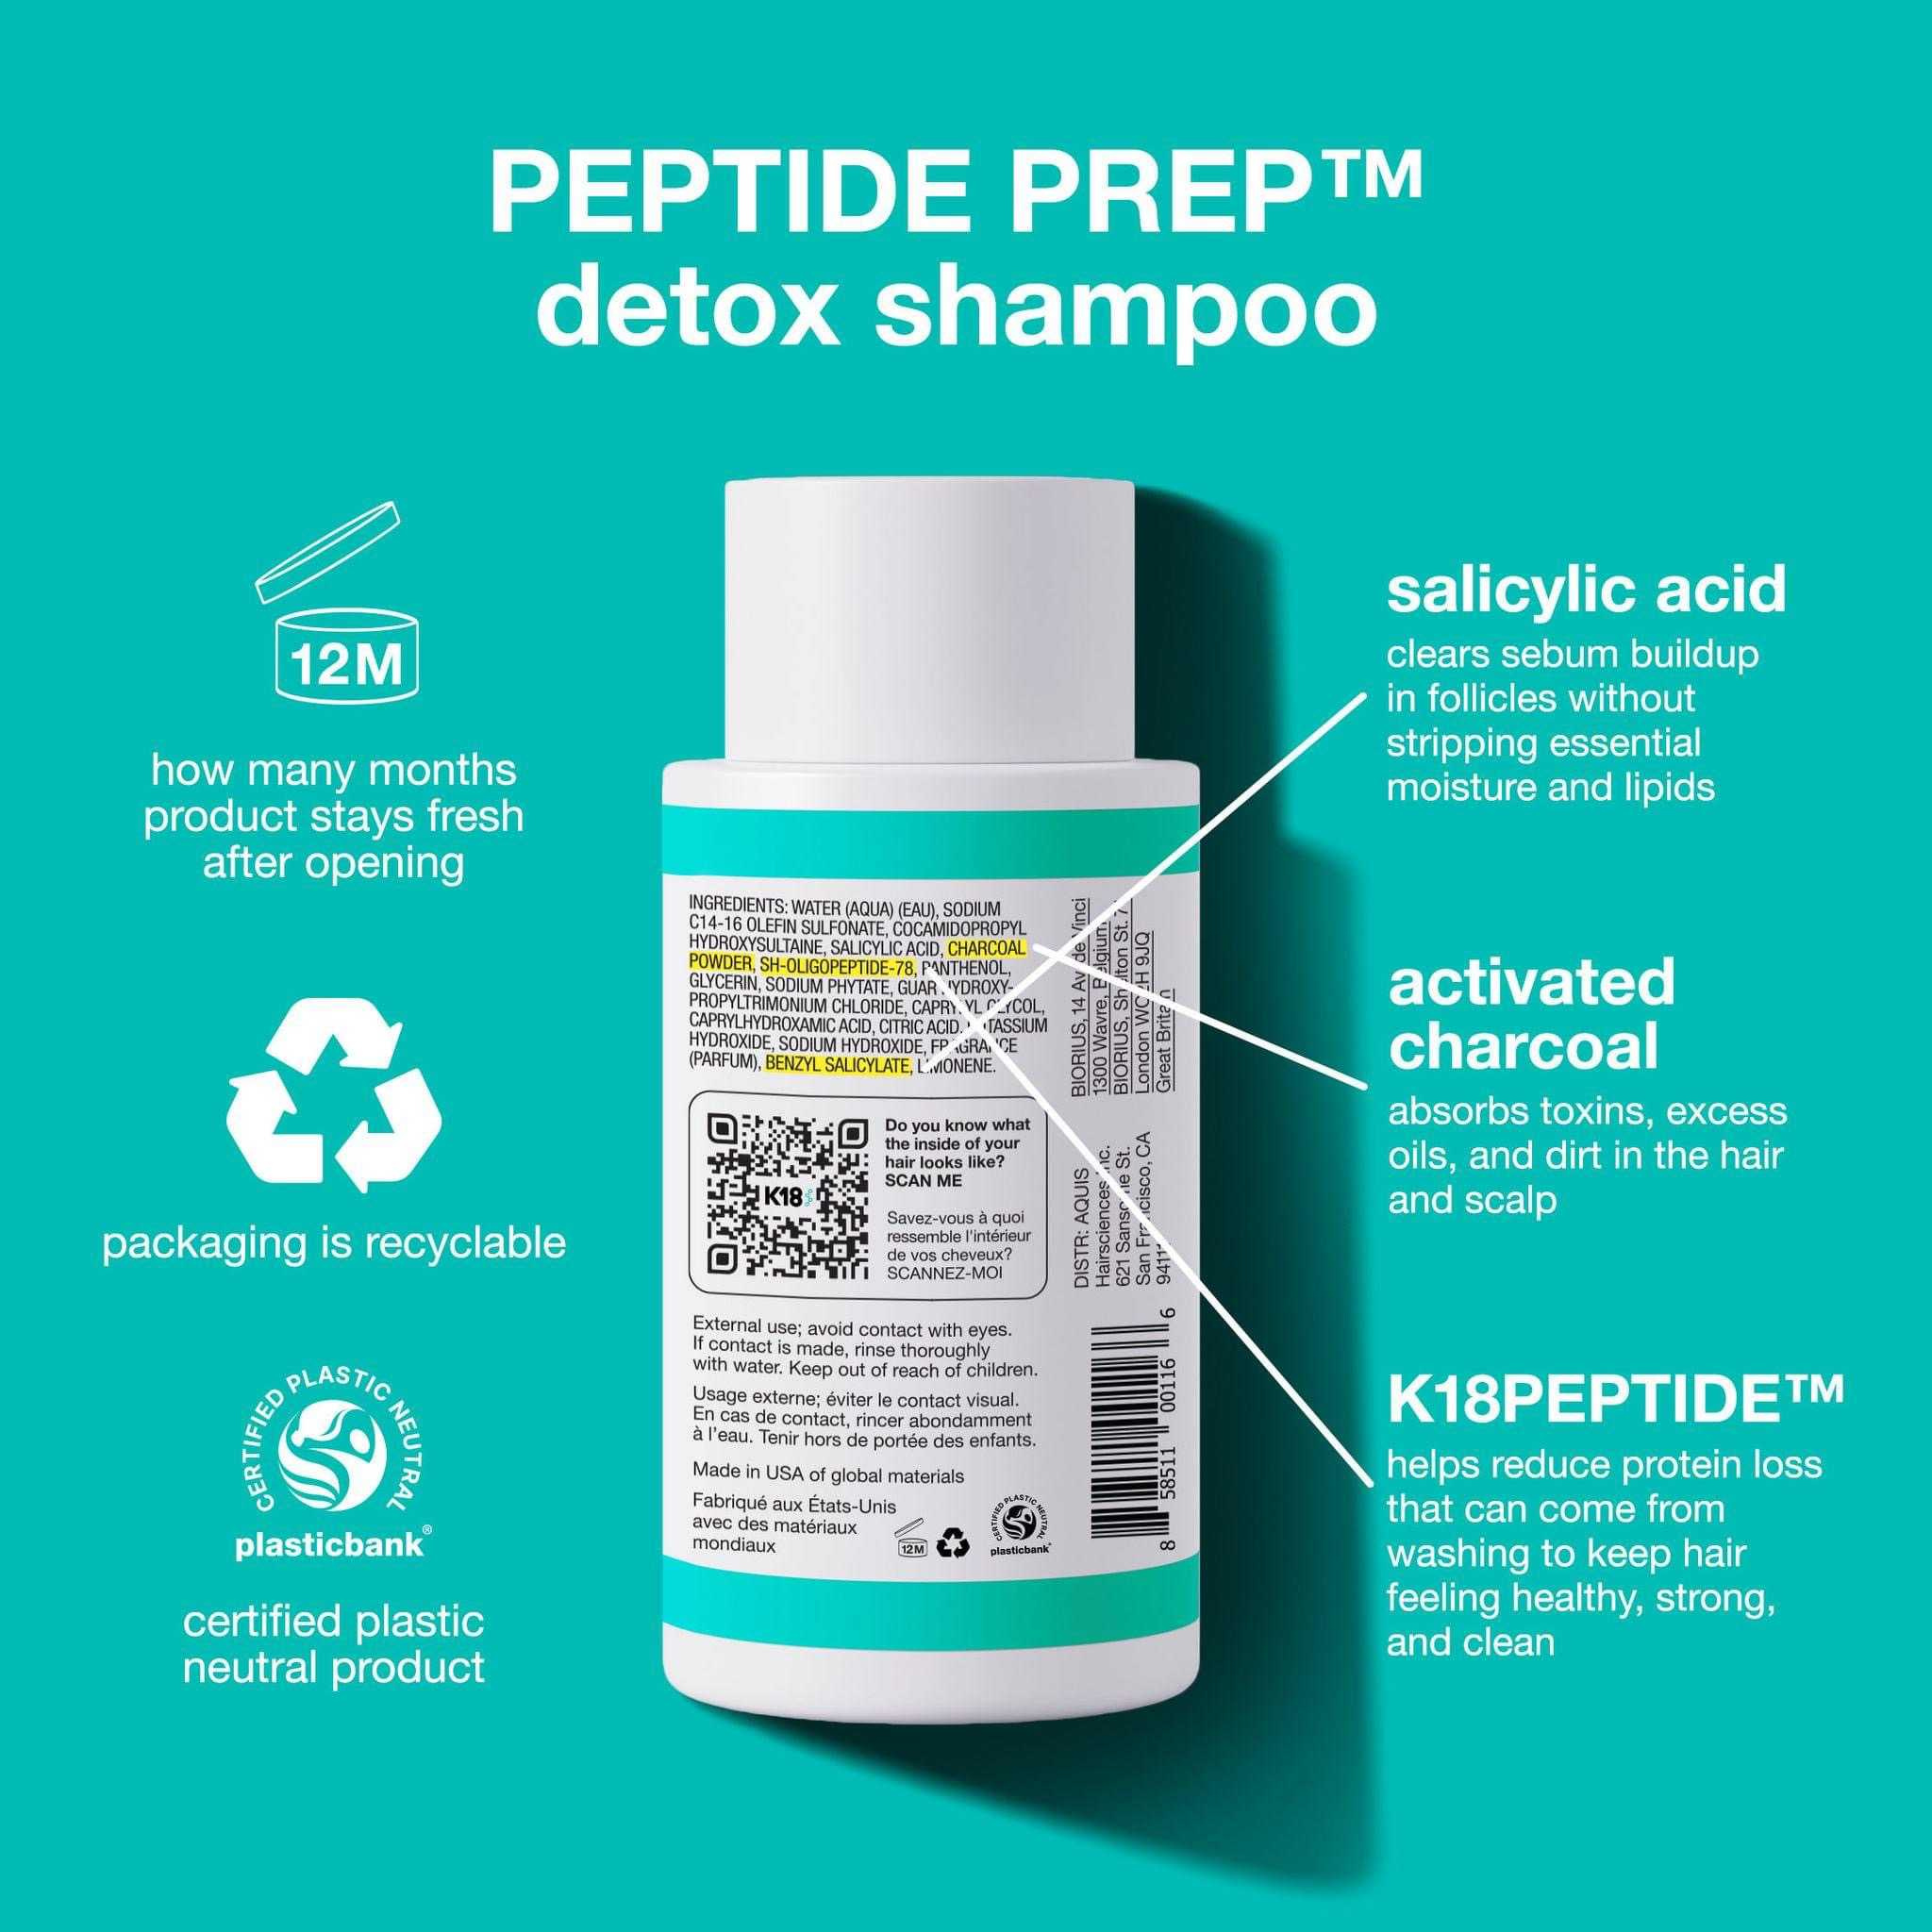 PEPTIDE PREP™ Clarifying Detox Shampoo